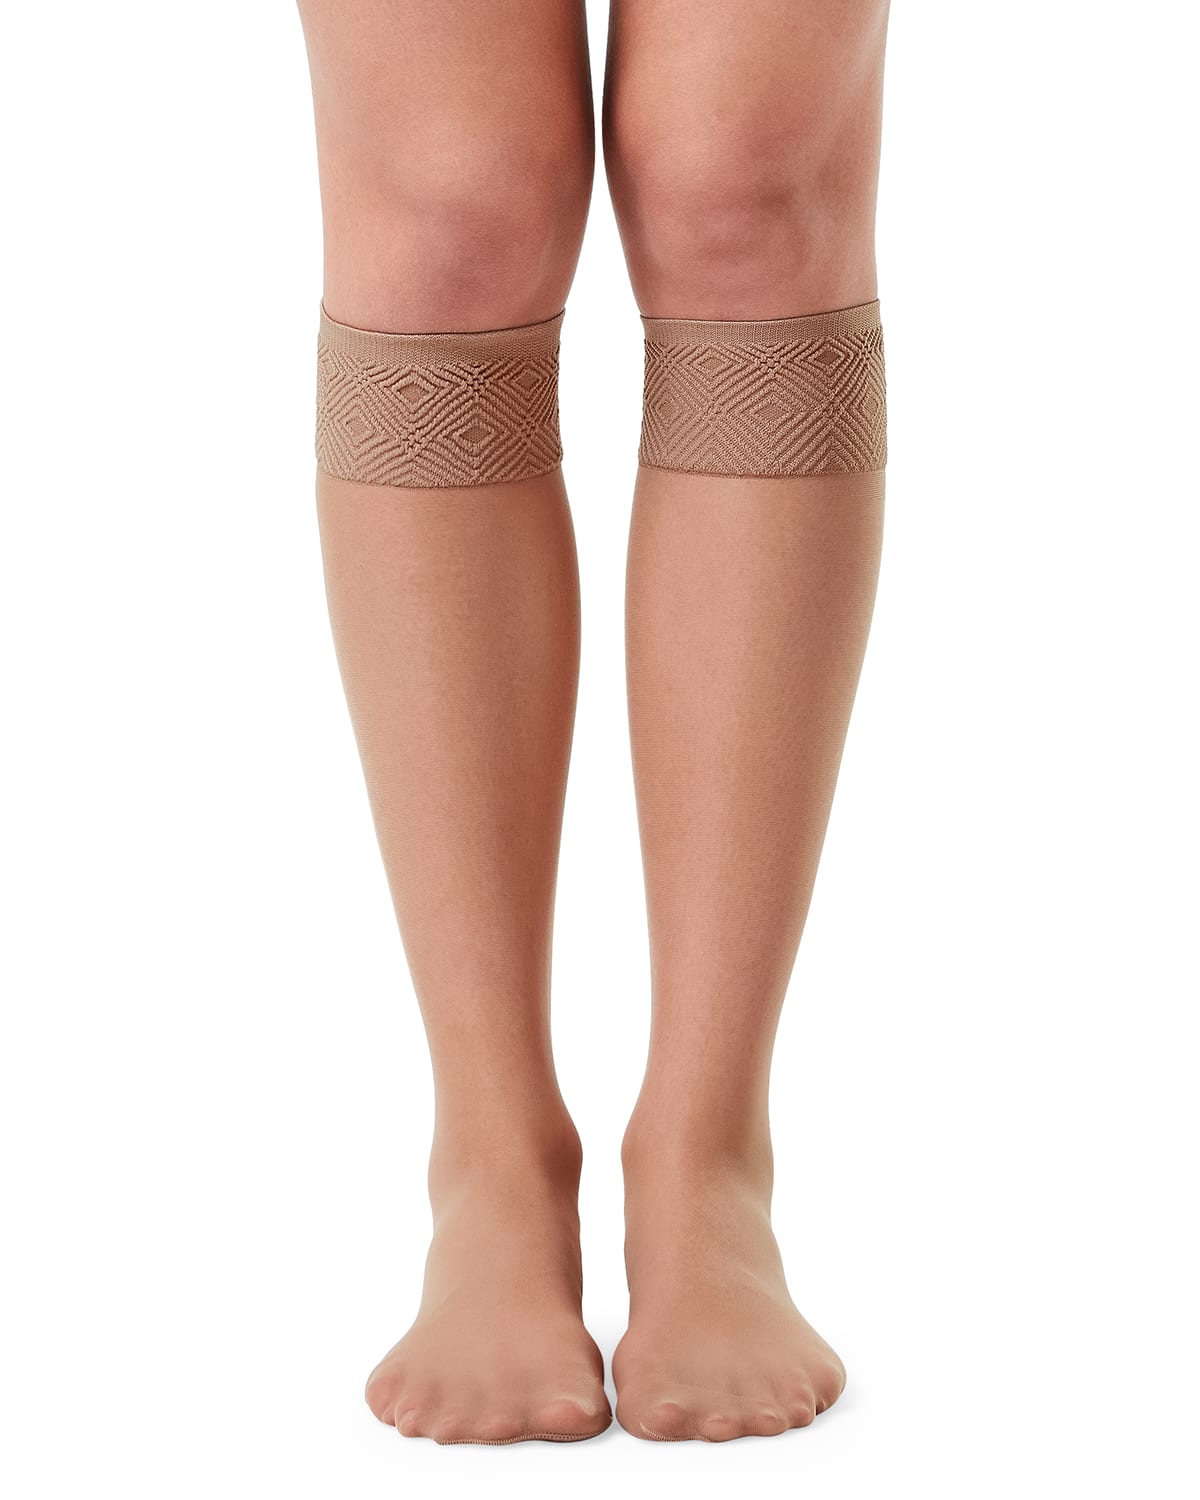 Spanx Hi-Knee Sheer Stockings